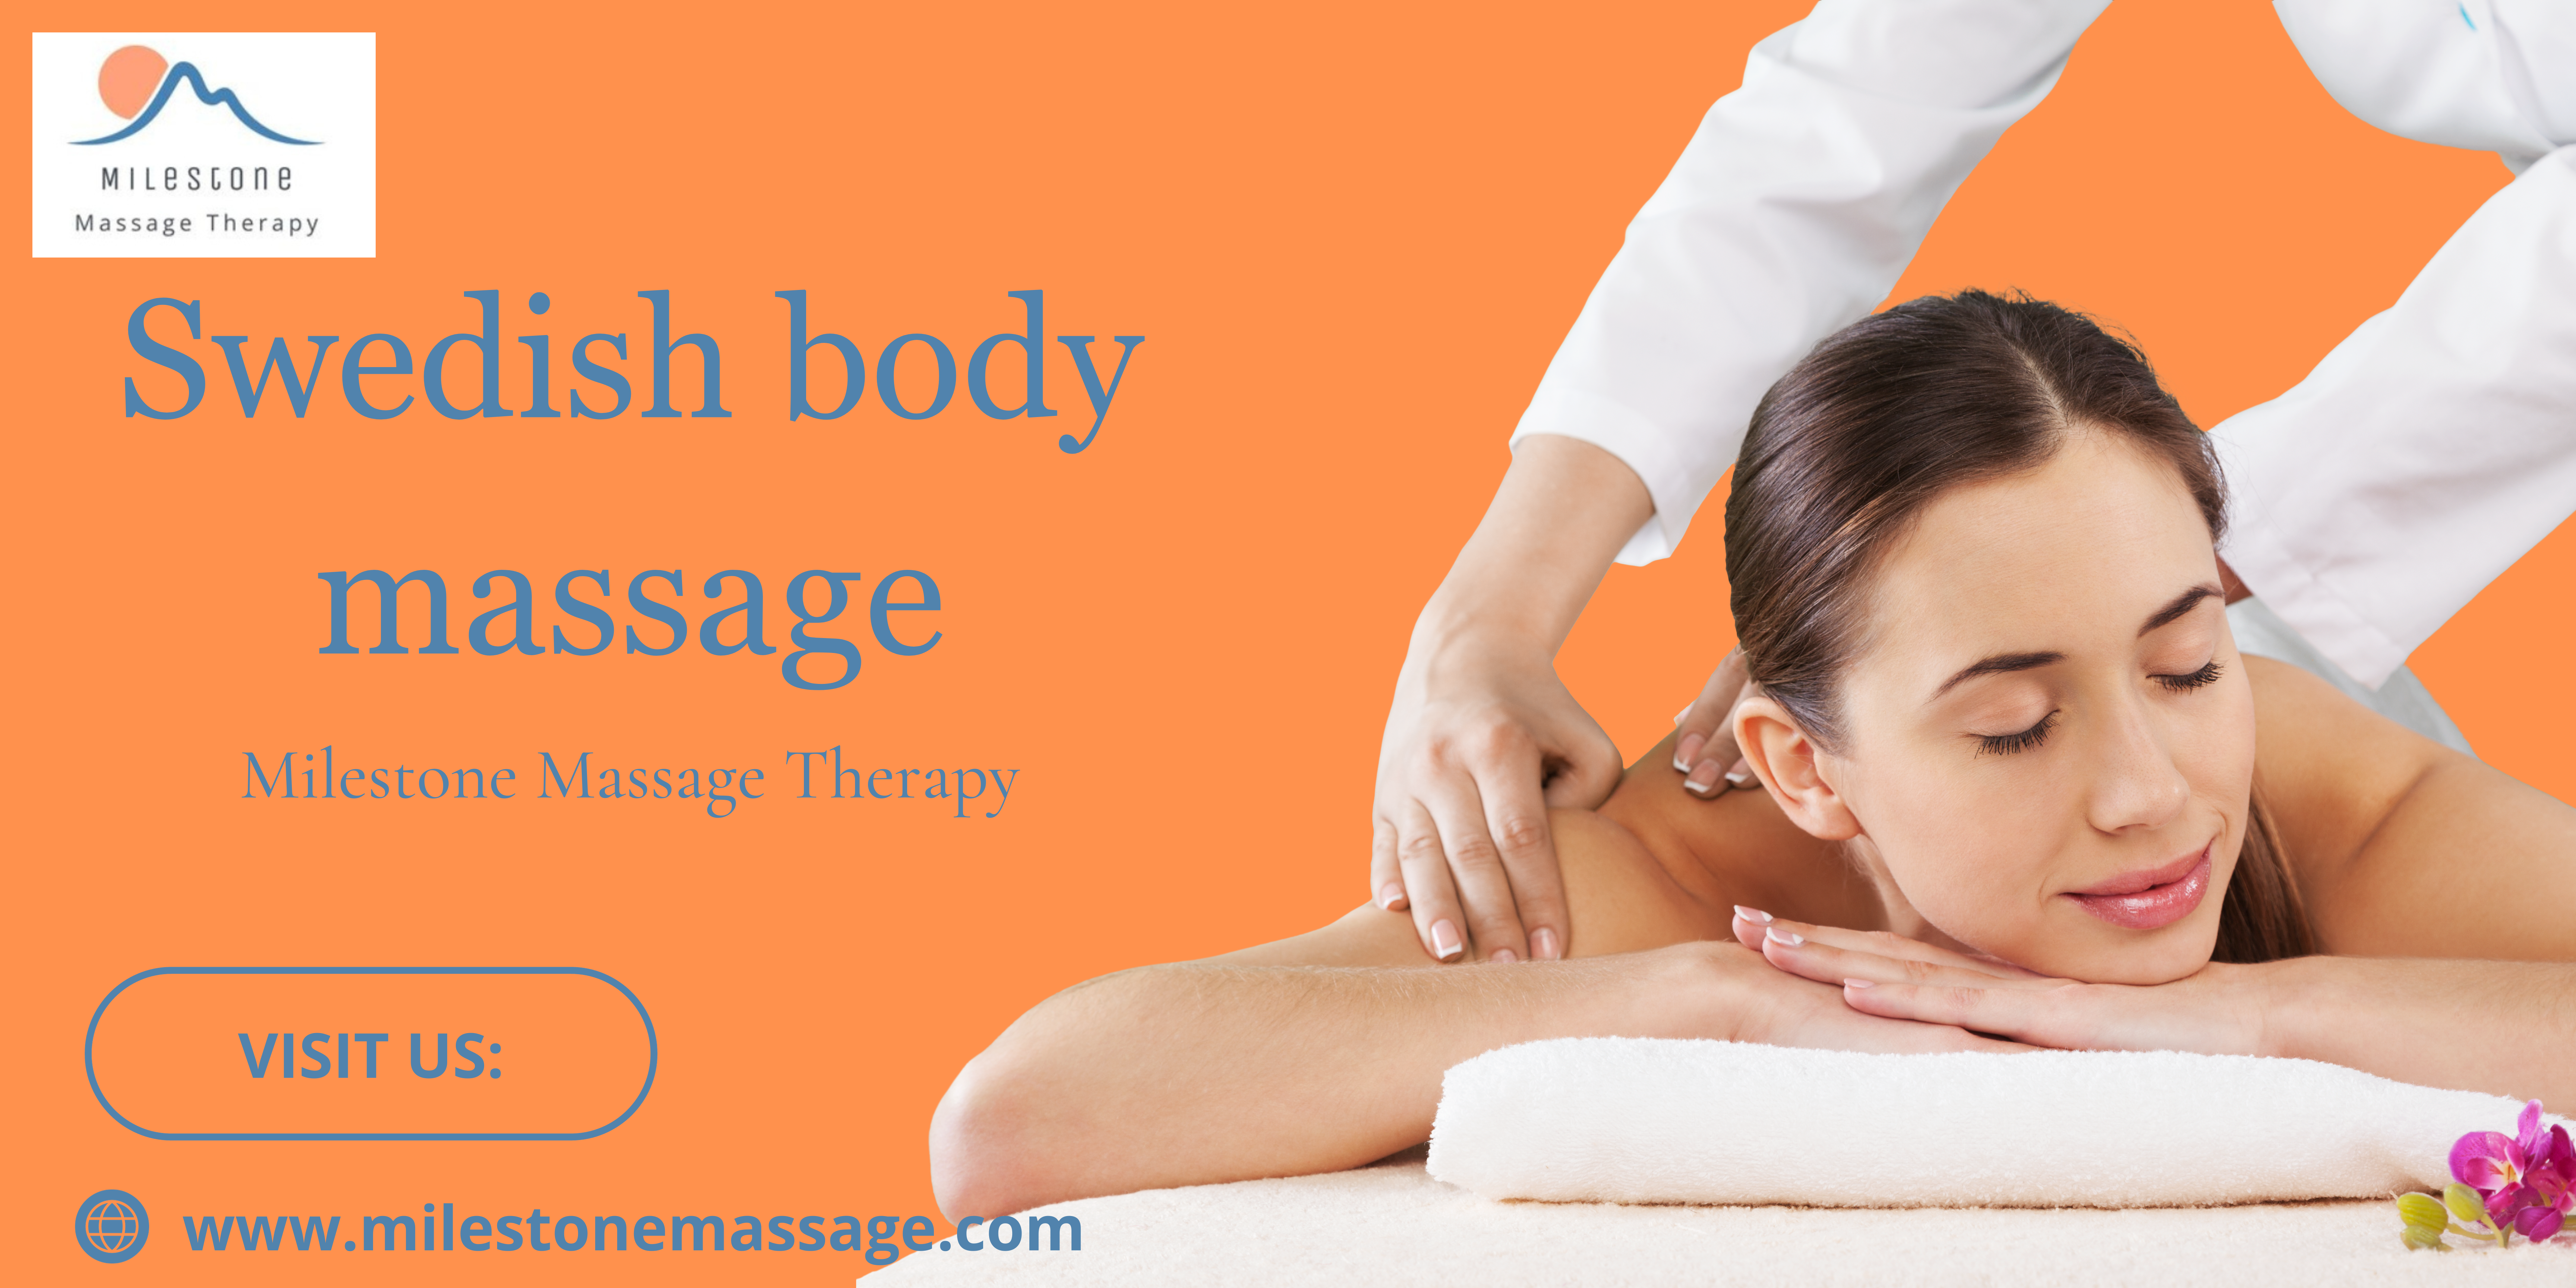 Milestone Massage Therapy Cover Image